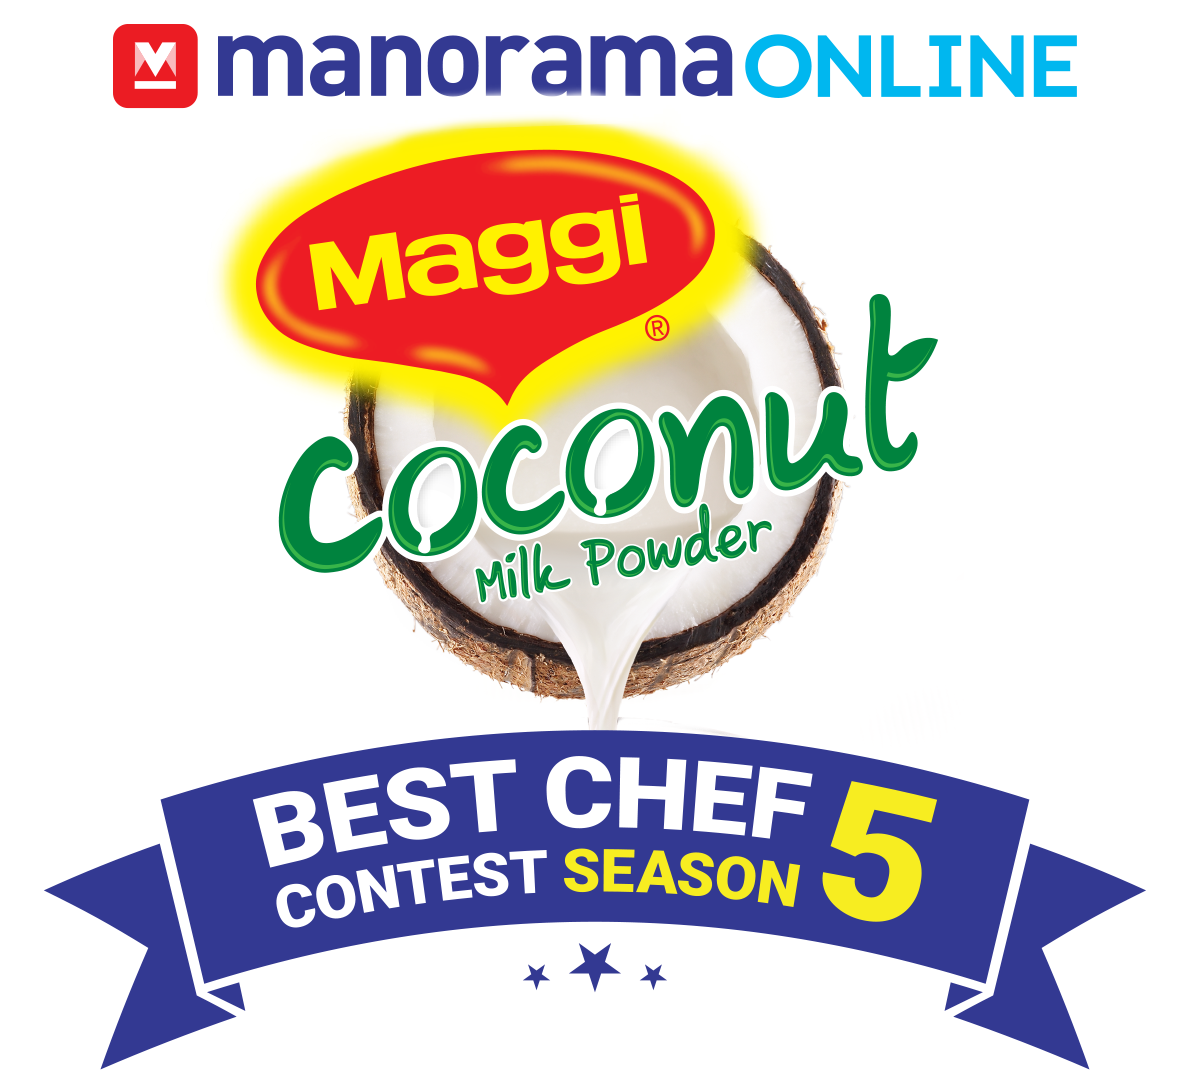 Manoramaonline, Maggi coconut milk powder, Best chef contest season 5